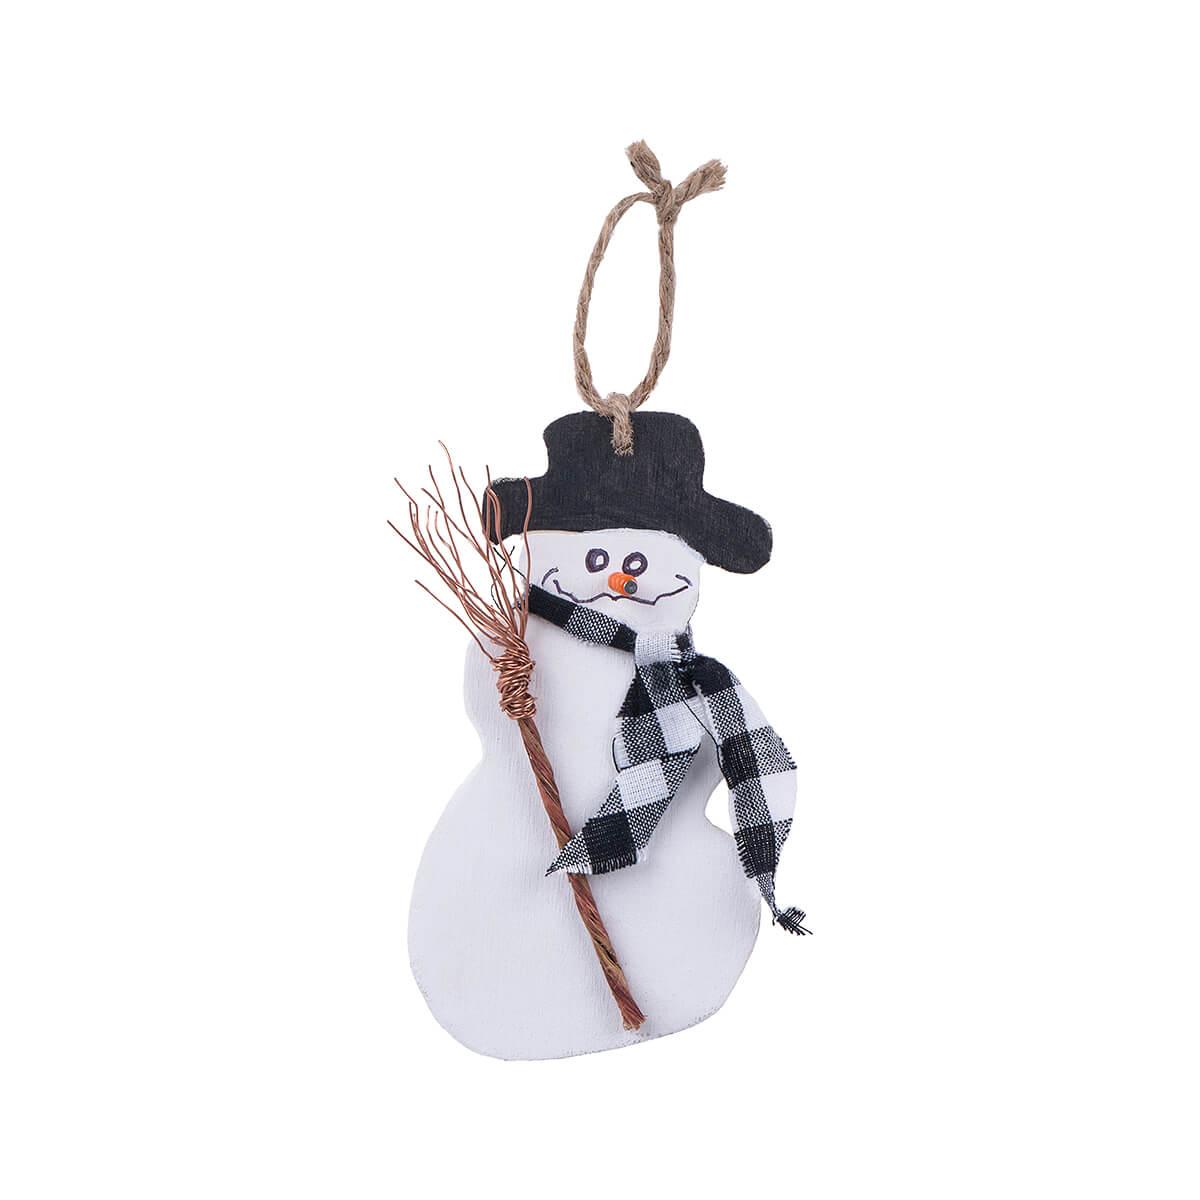  Wooden Snowman Ornament